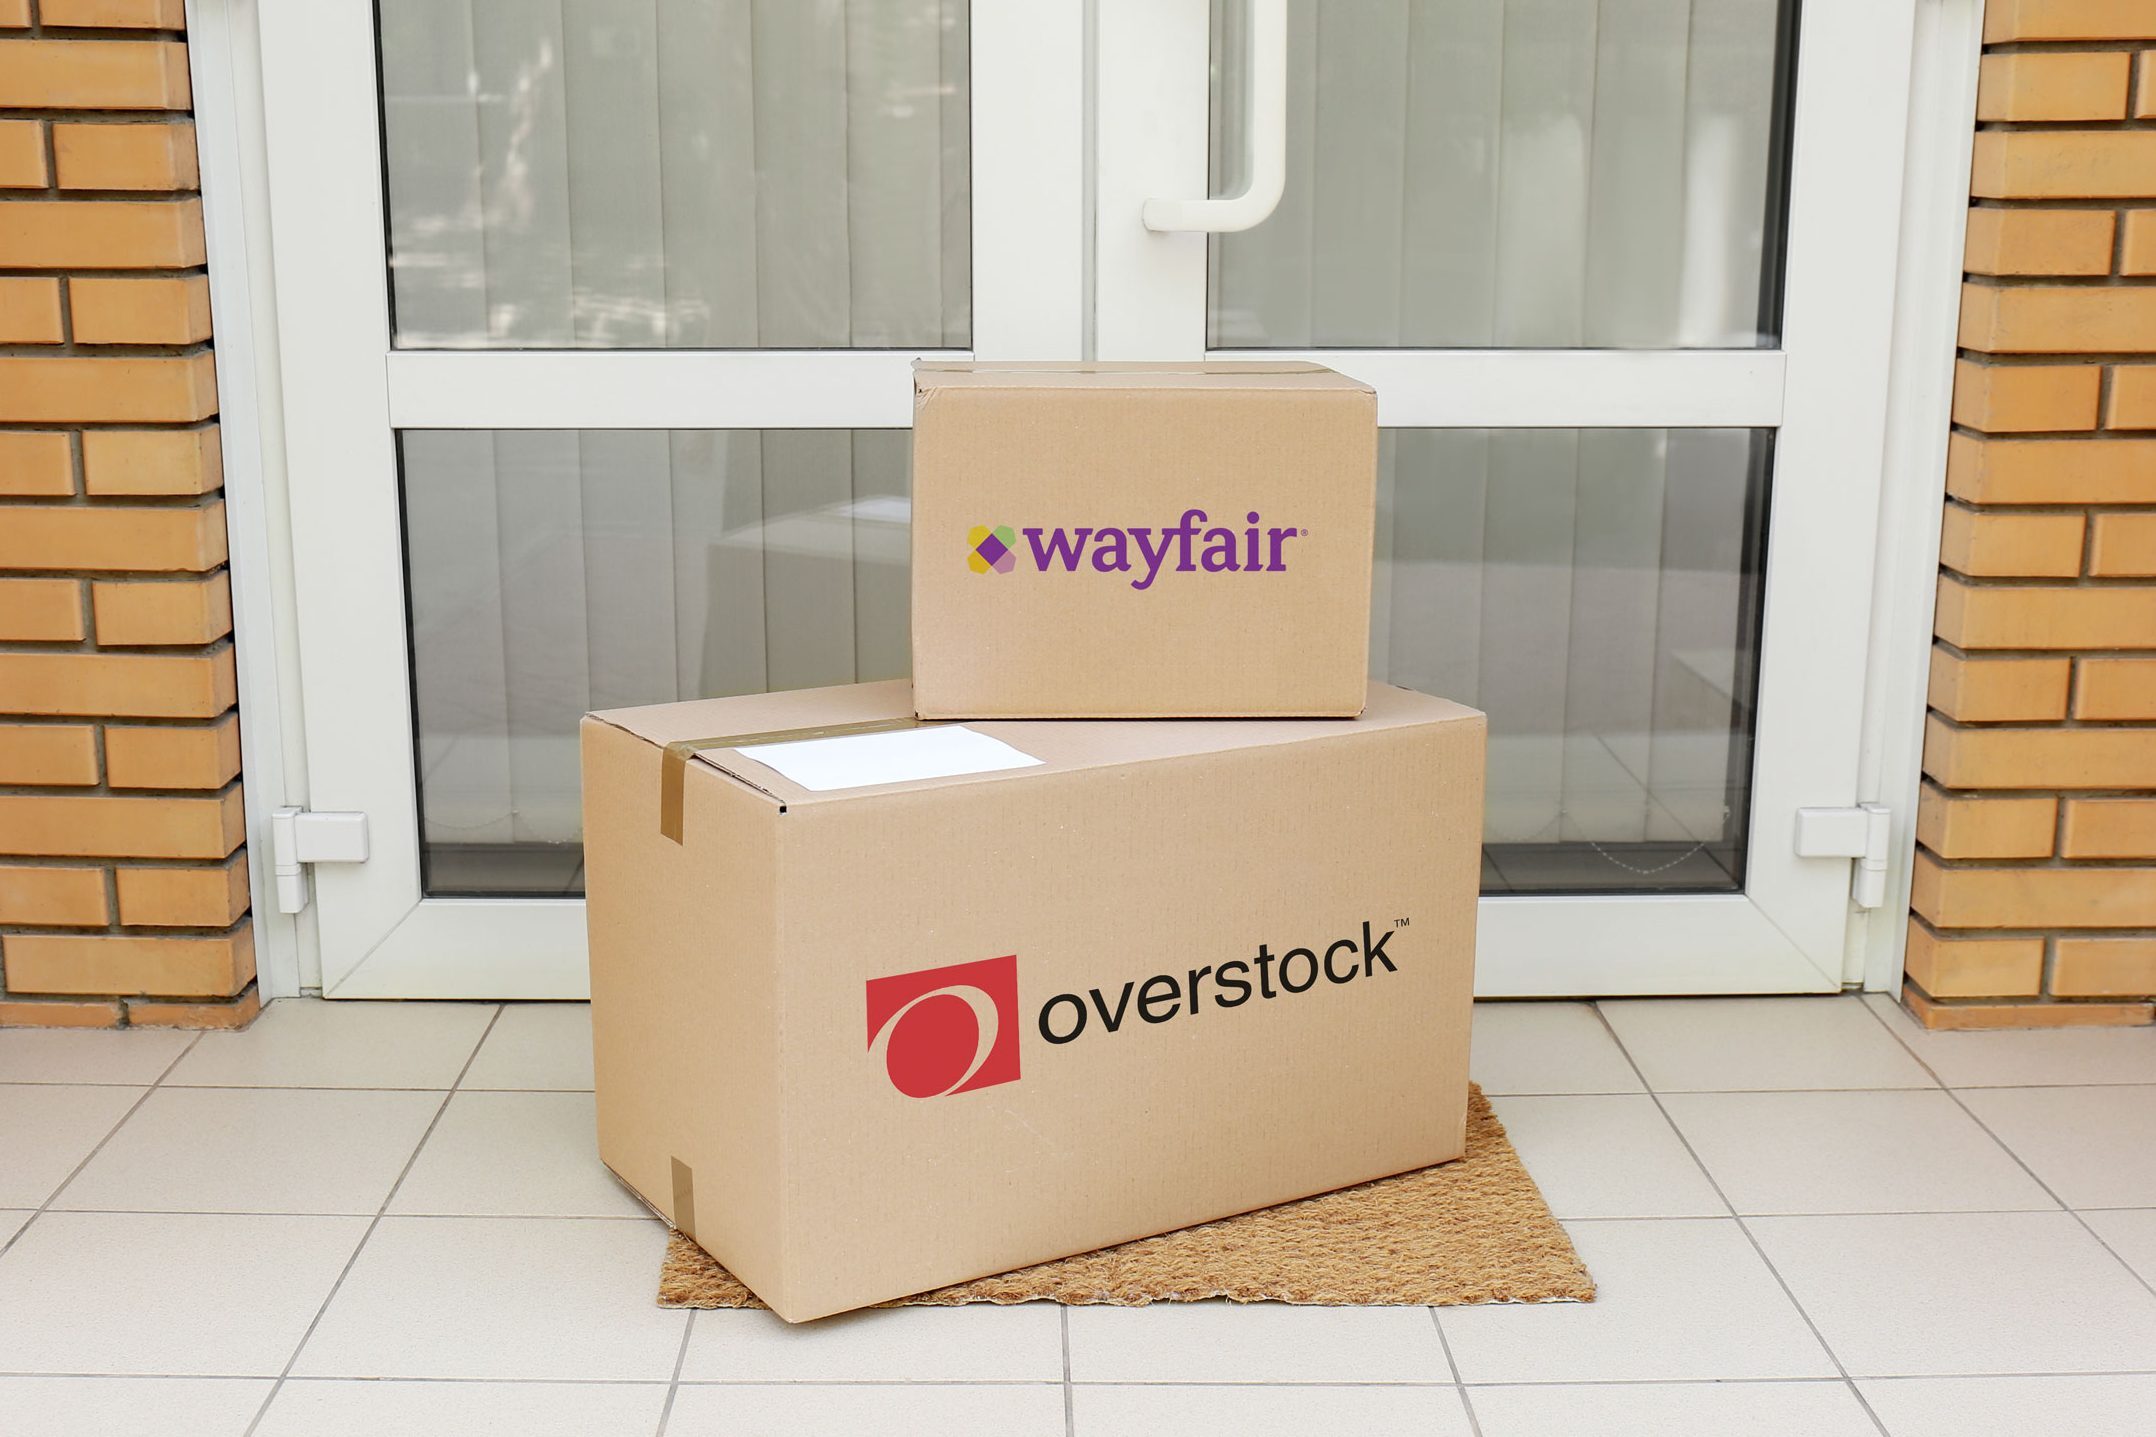 Wayfair Open Box Deals: How To Find The Best Discounts